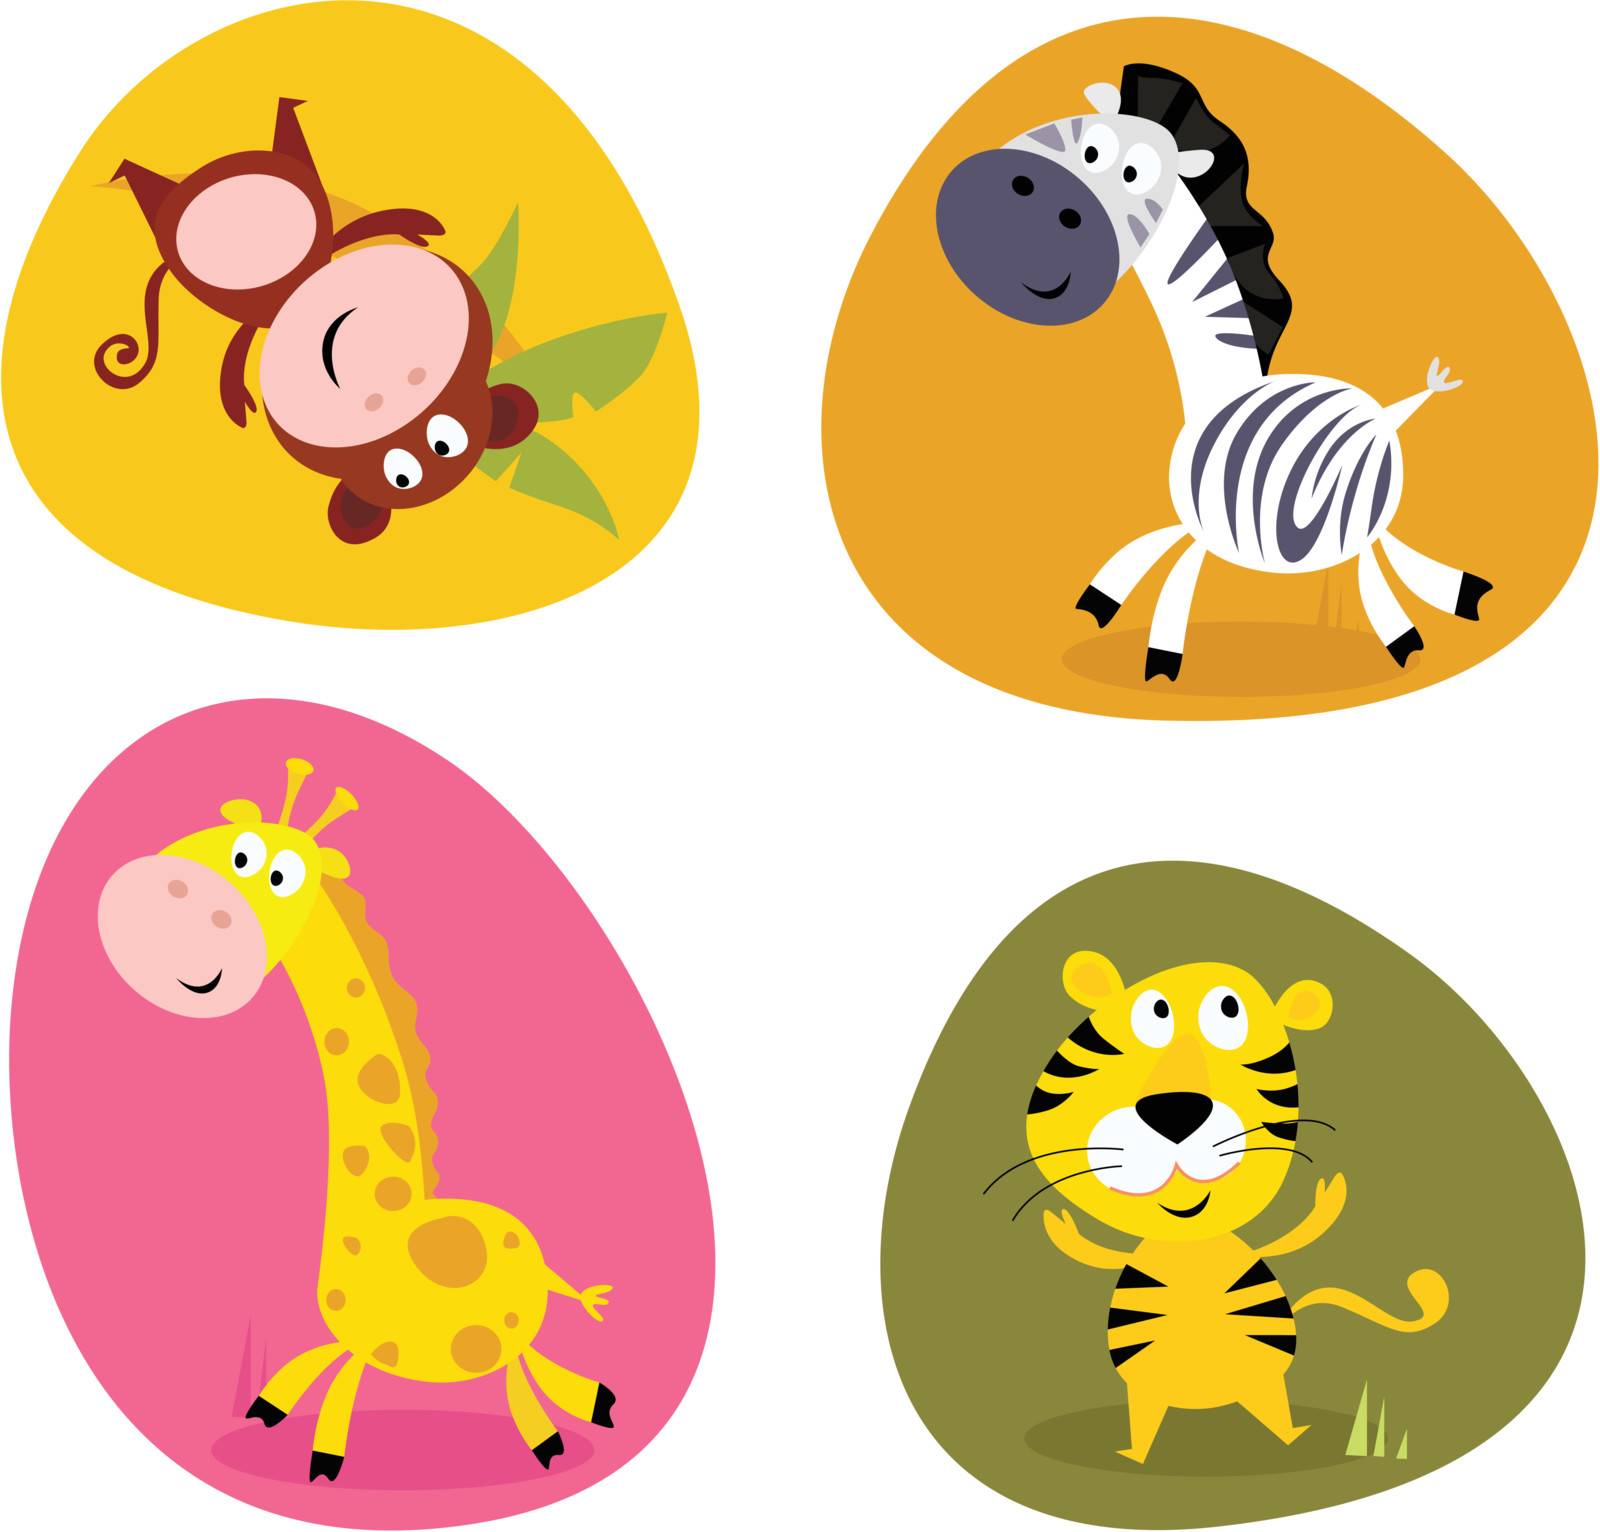 Illustration set of cute safari animals: monkey, tiger, giraffe and zebra by Lordalea